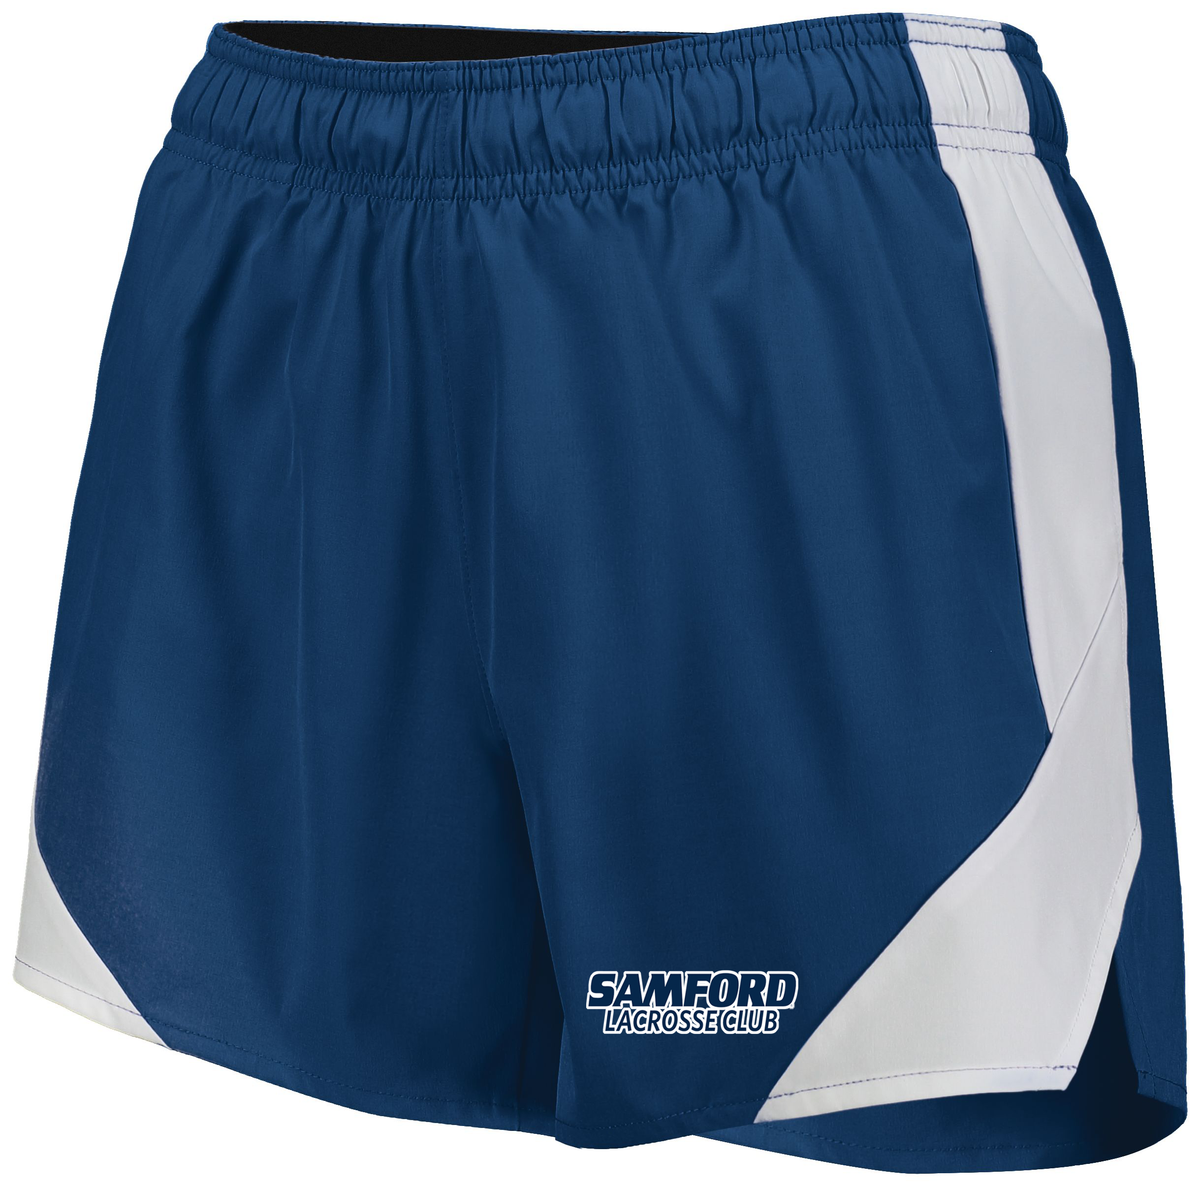 Samford University Lacrosse Club Ladies Olympus Shorts